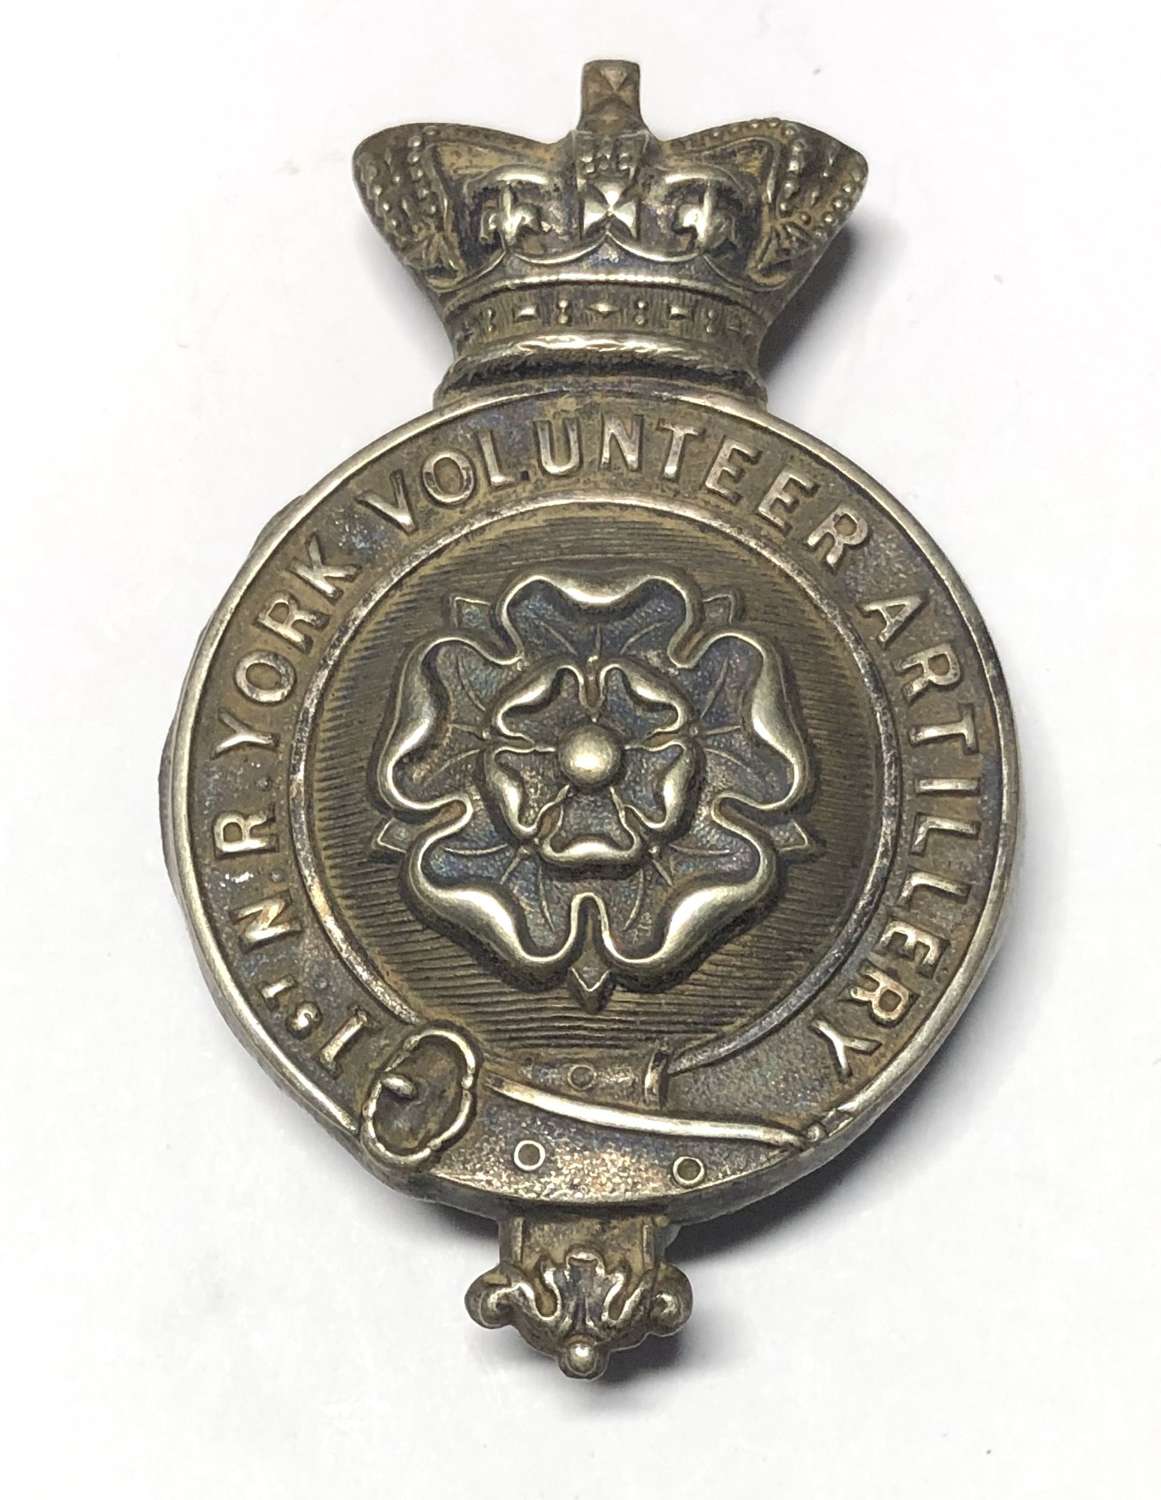 1st North Riding Yorkshire Volunteer Artillery Victorian cap badge